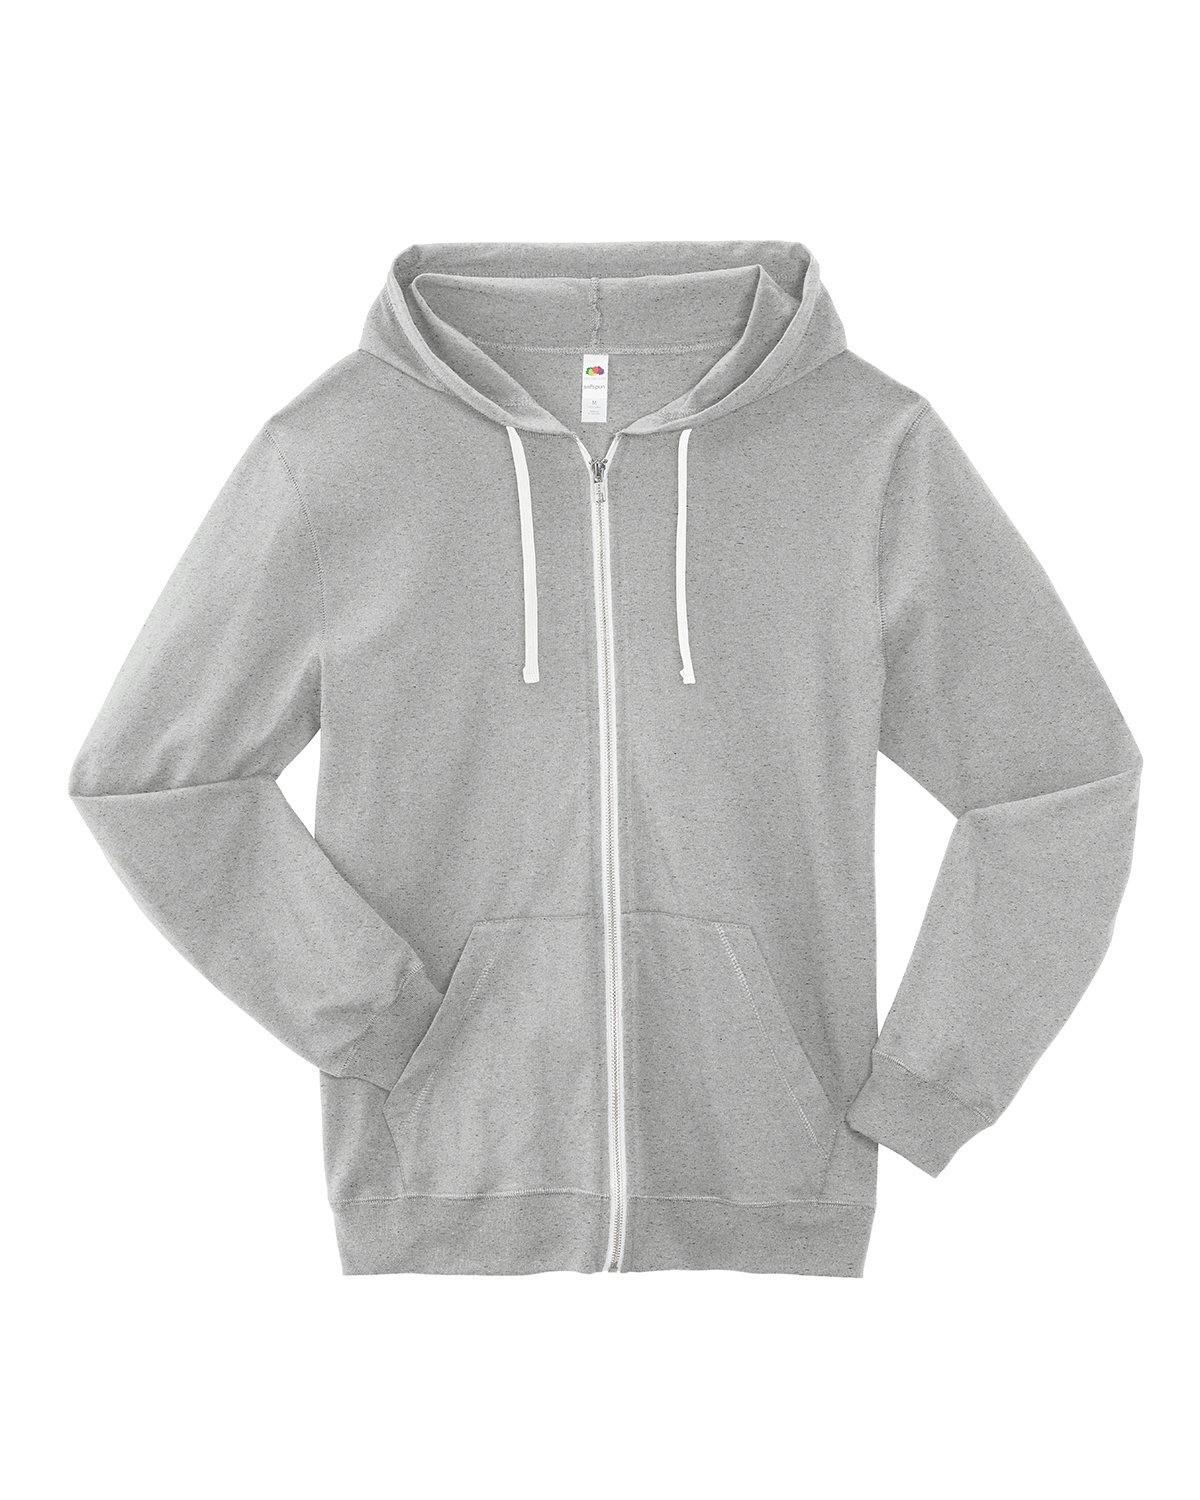 Image for Adult Sofspun® Jersey Full-Zip Hooded Sweatshirt